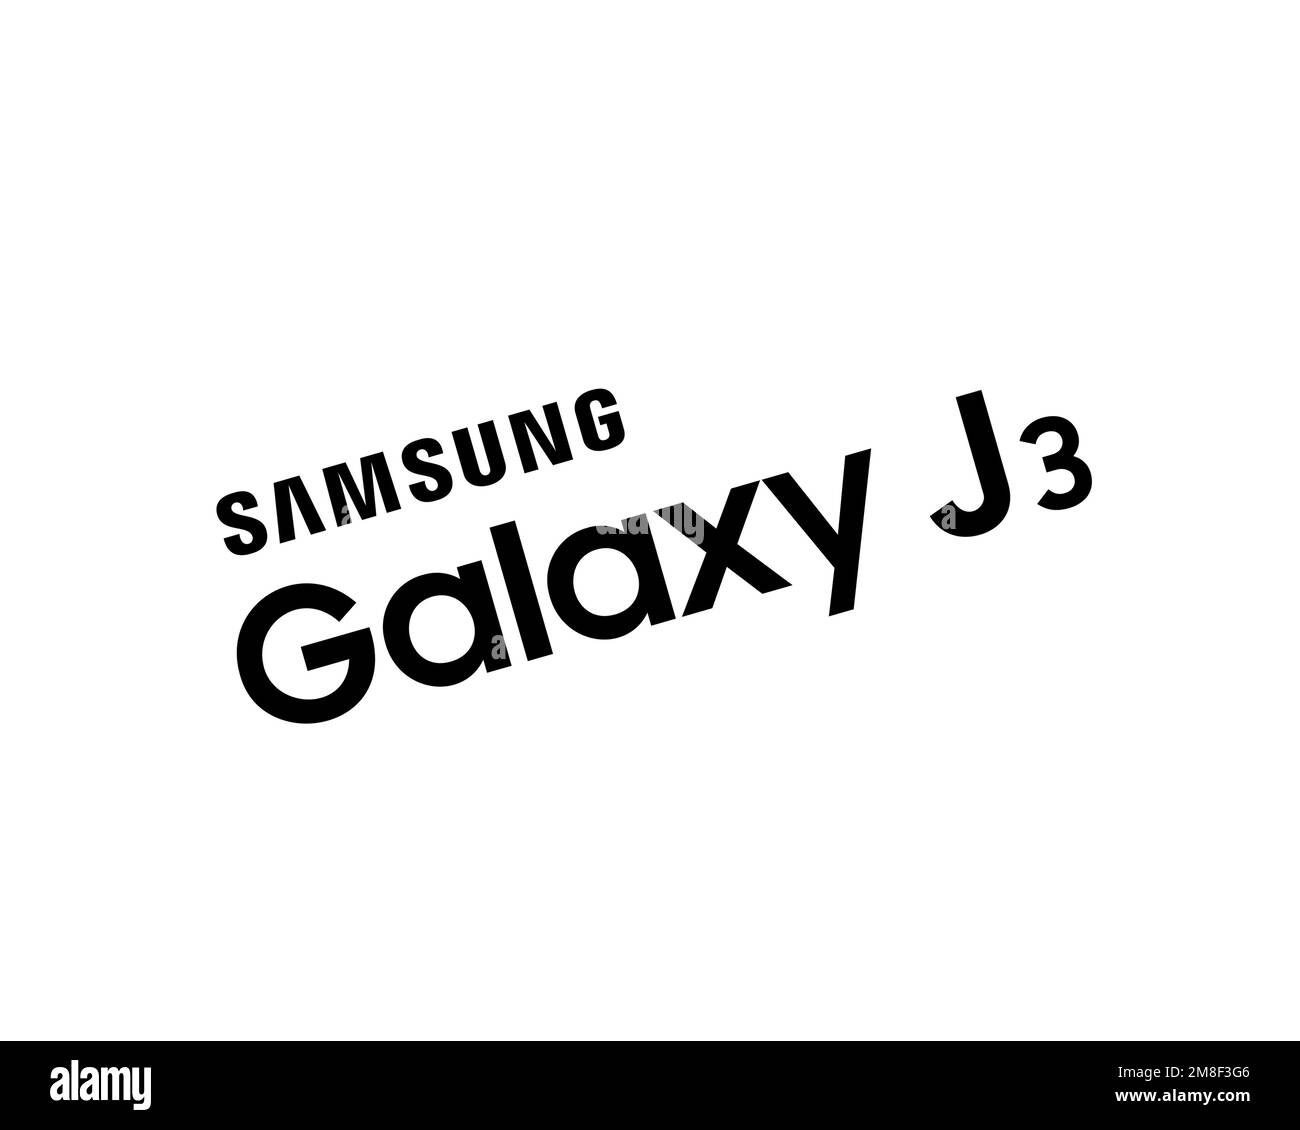 Samsung Galaxy J3 2016, Rotated Logo, White Background Stock Photo